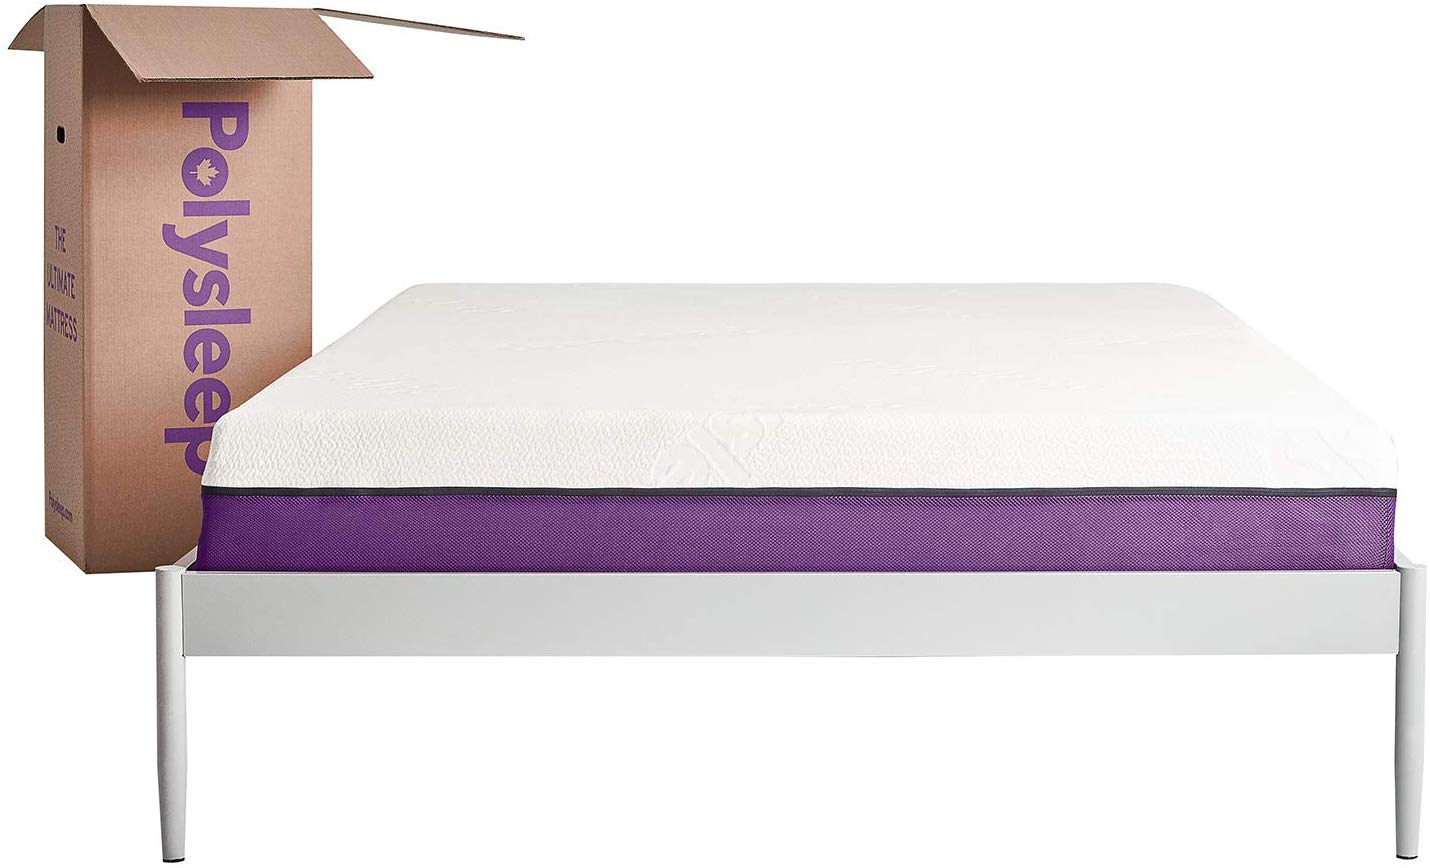 Polysleep mattress on top of a metallic foundation with a Polysleep box on the side